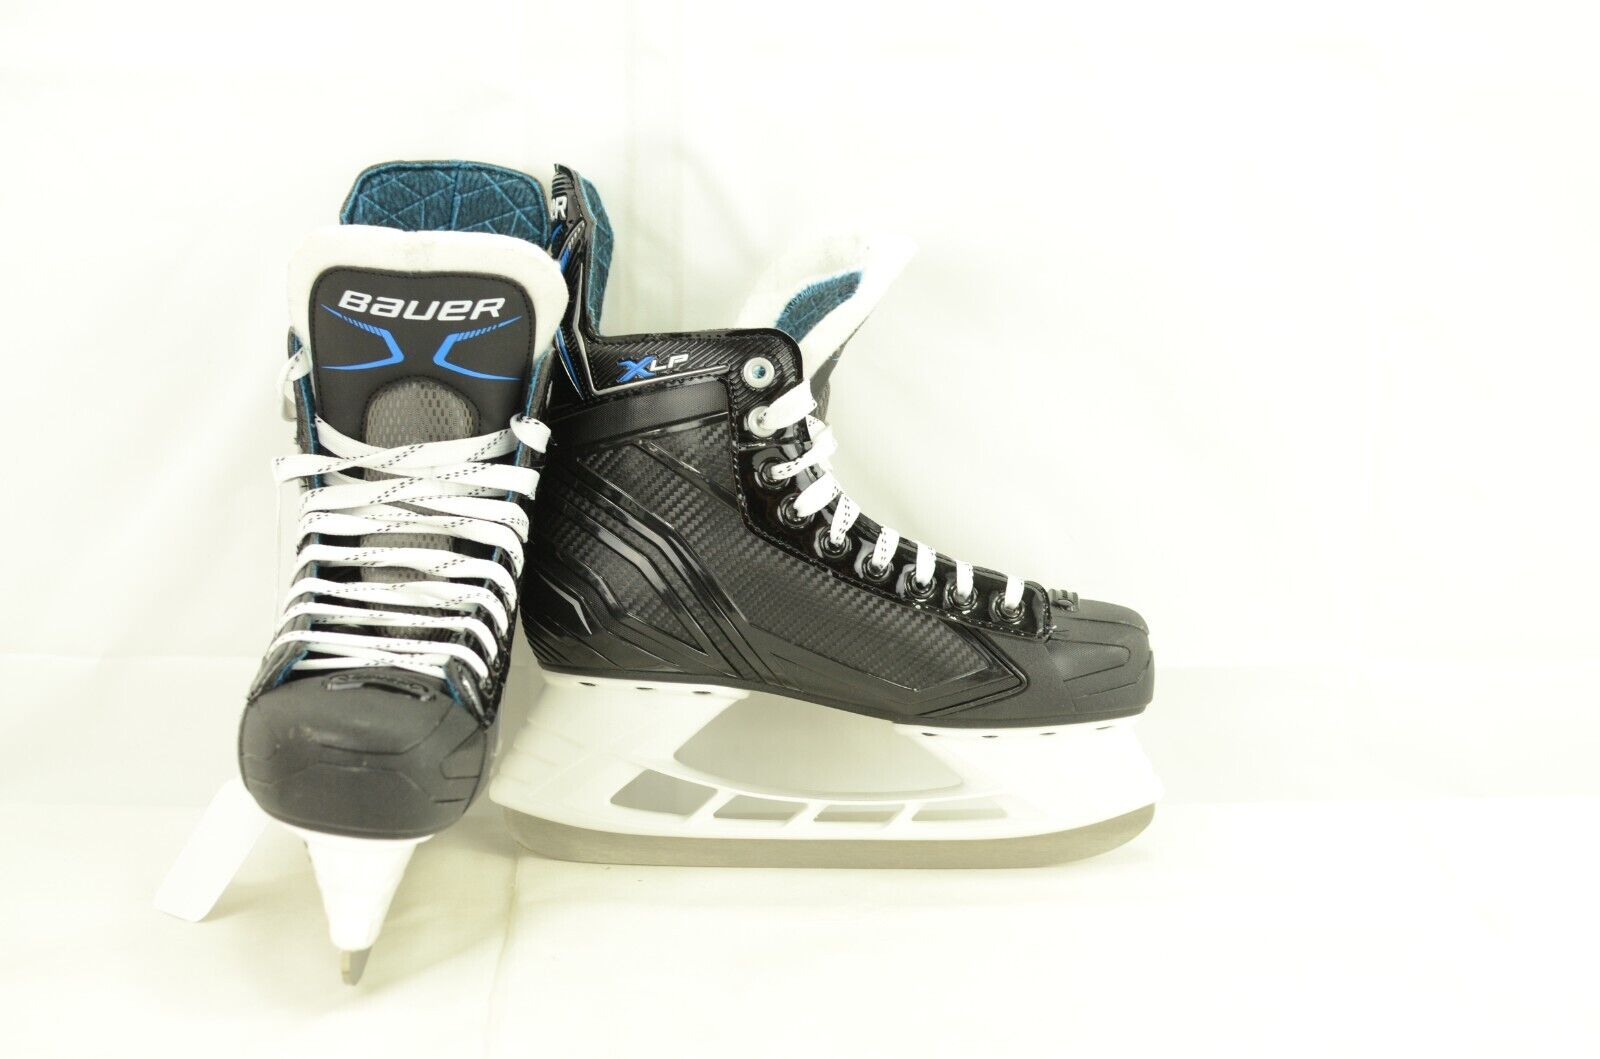 Bauer X-LP Ice Hockey Skates Intermediate Size 5 (0616-8369)